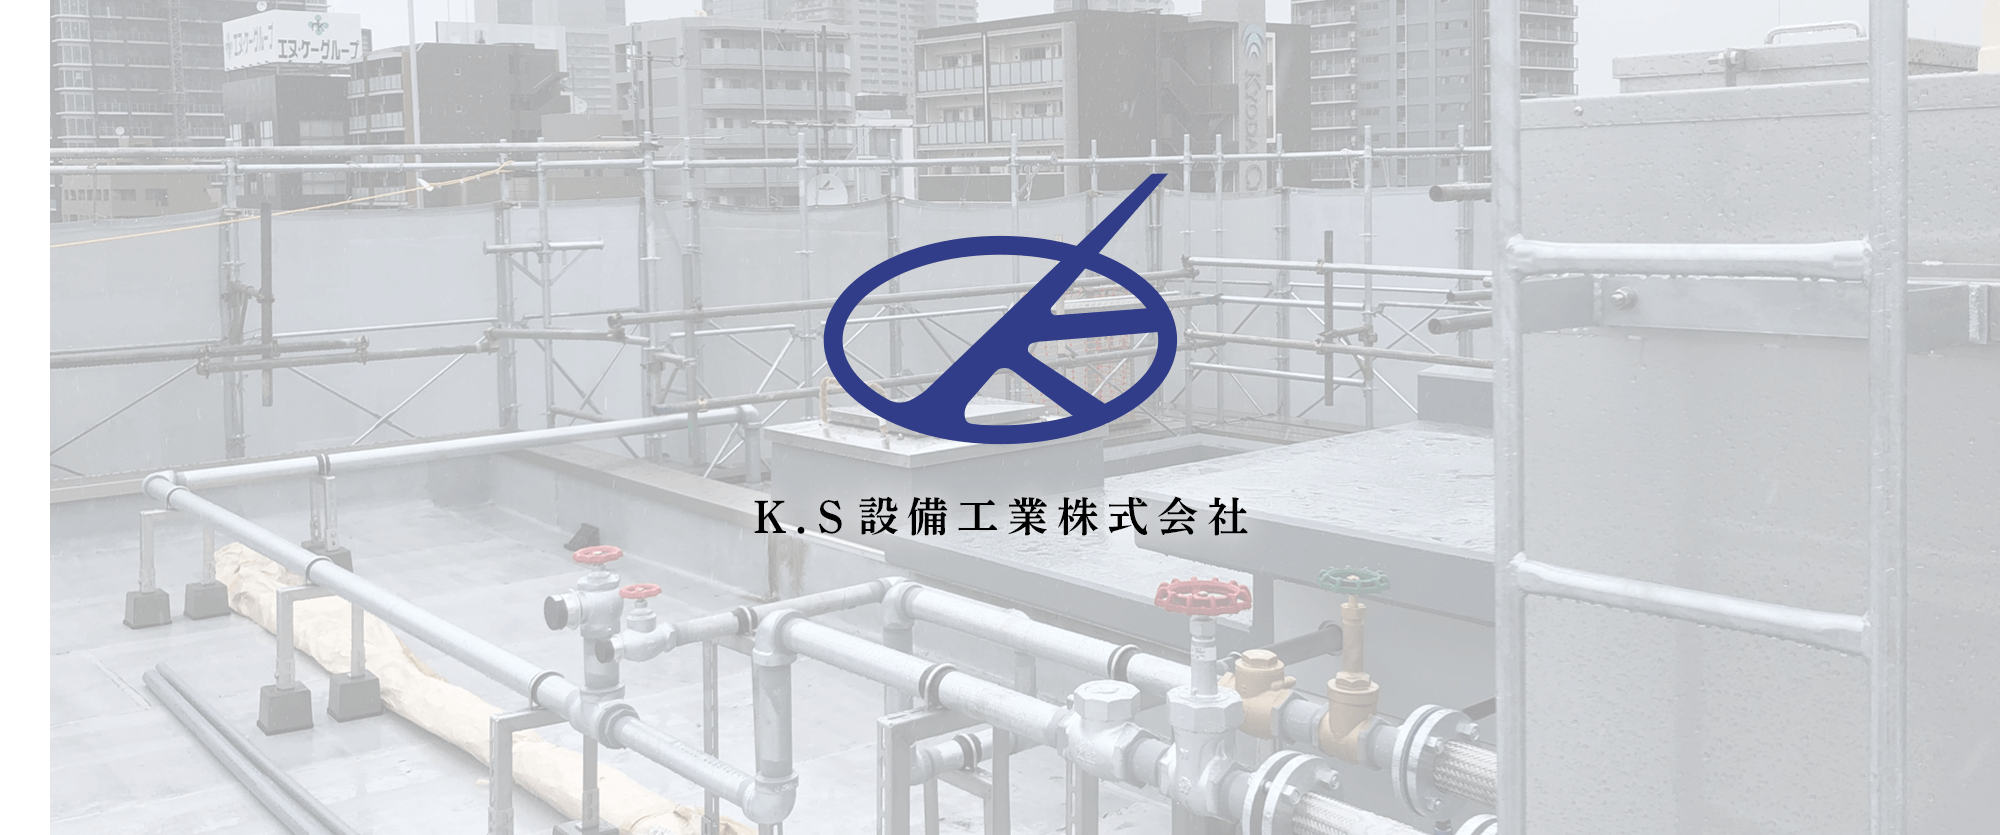 K.S設備工業株式会社